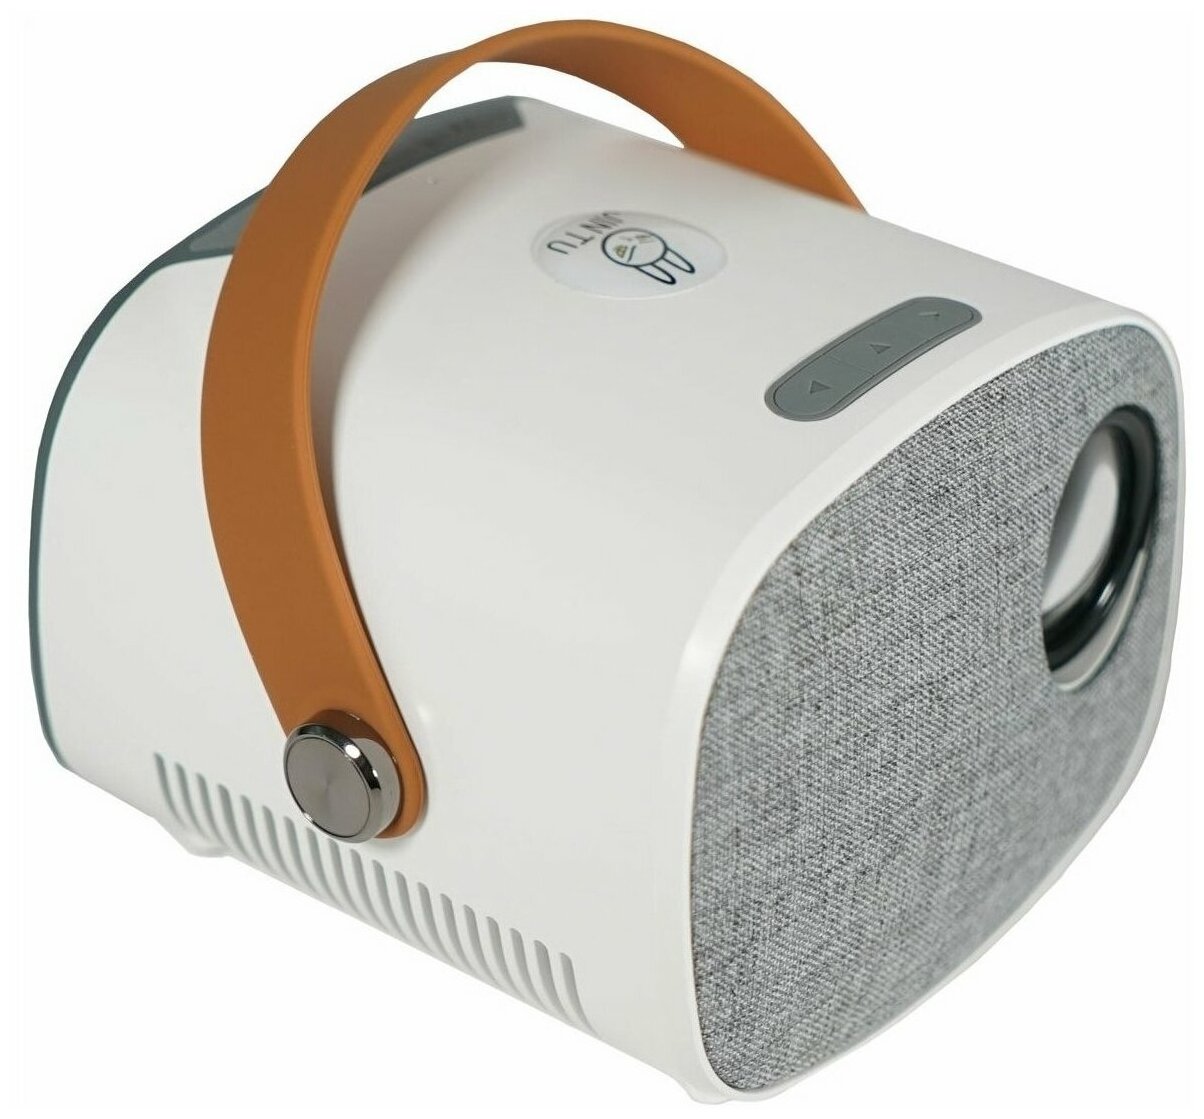 Портативный мини Мульт проектор JIN TU YG-230 с wi-fi и акумулятором